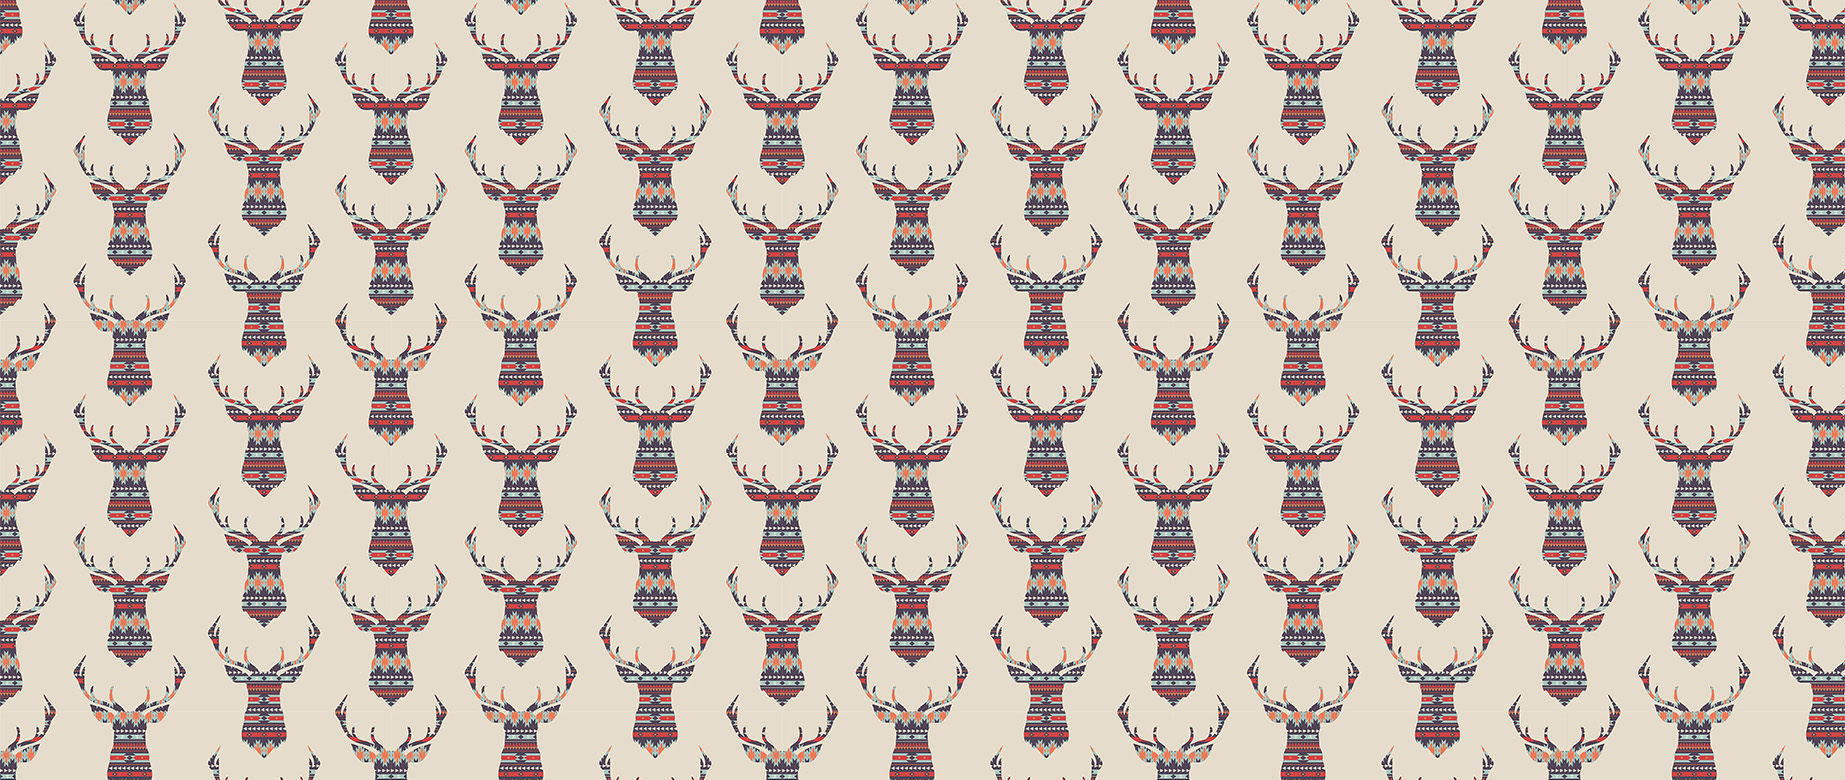 reindeer-ethnic-ikat-pattern-wallpapers-full-wide-view